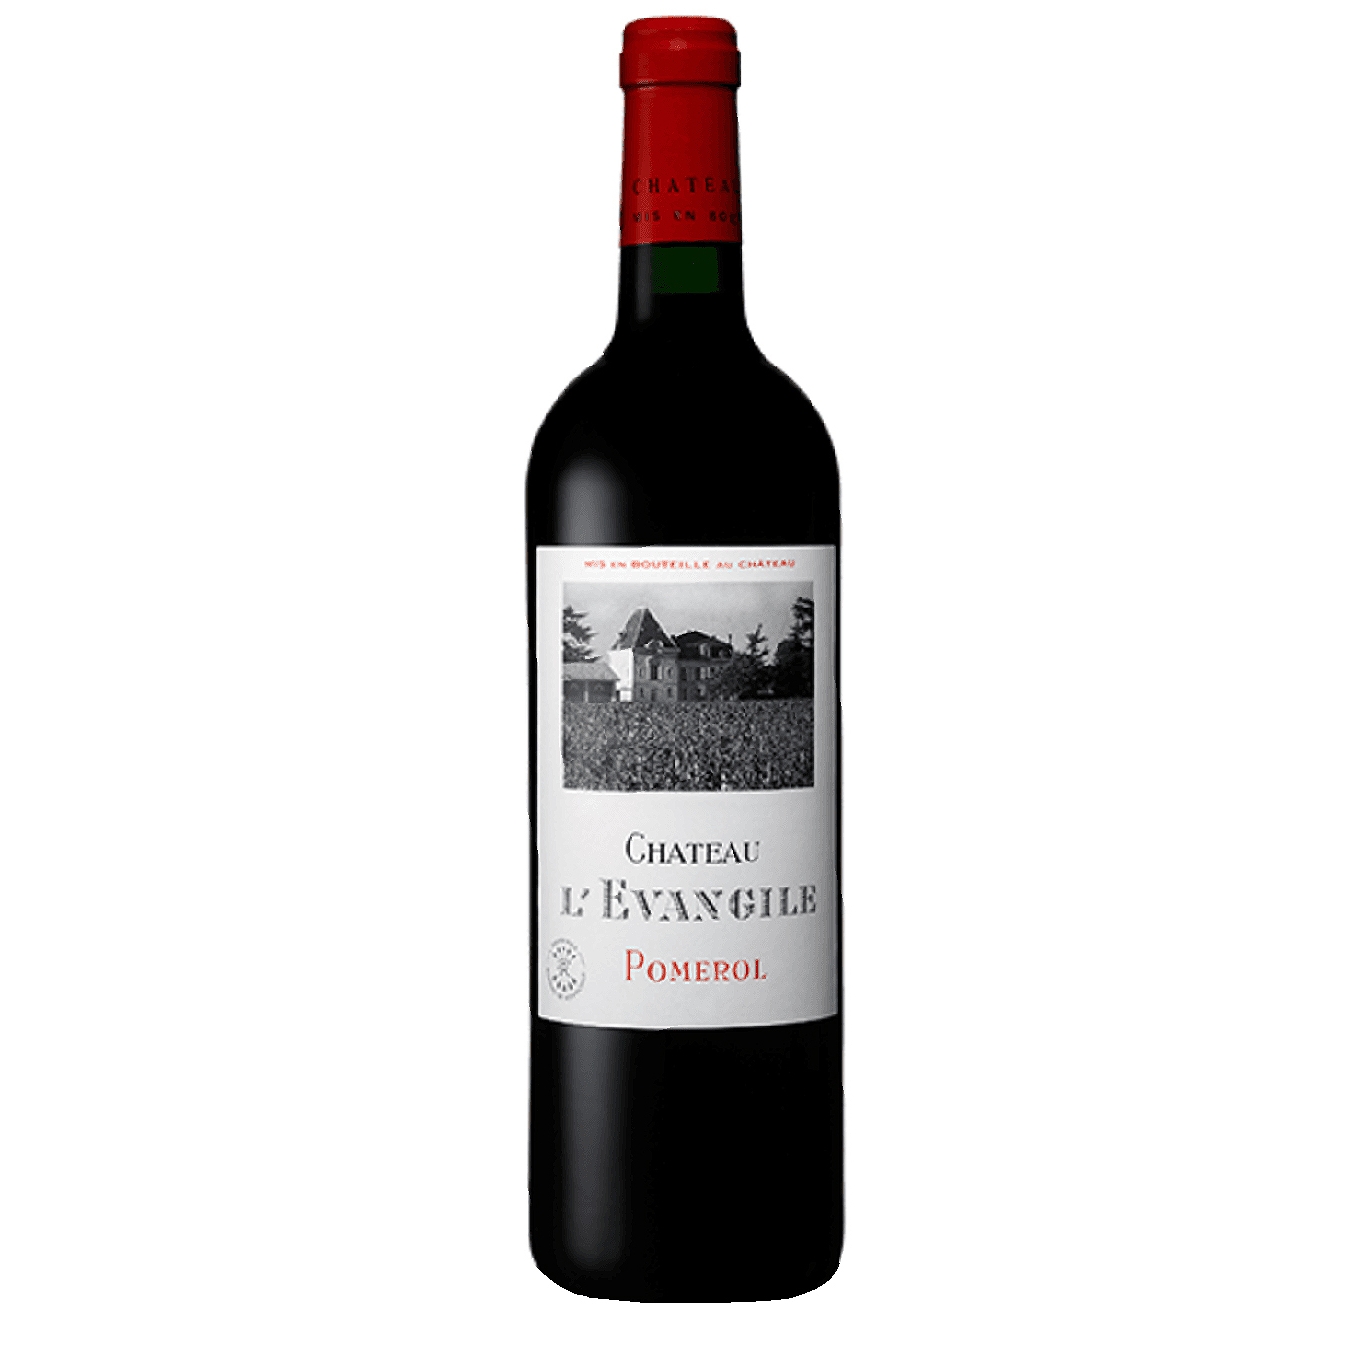 Château L'Evangile Grand Vin Pomerol 2005 Red Wine